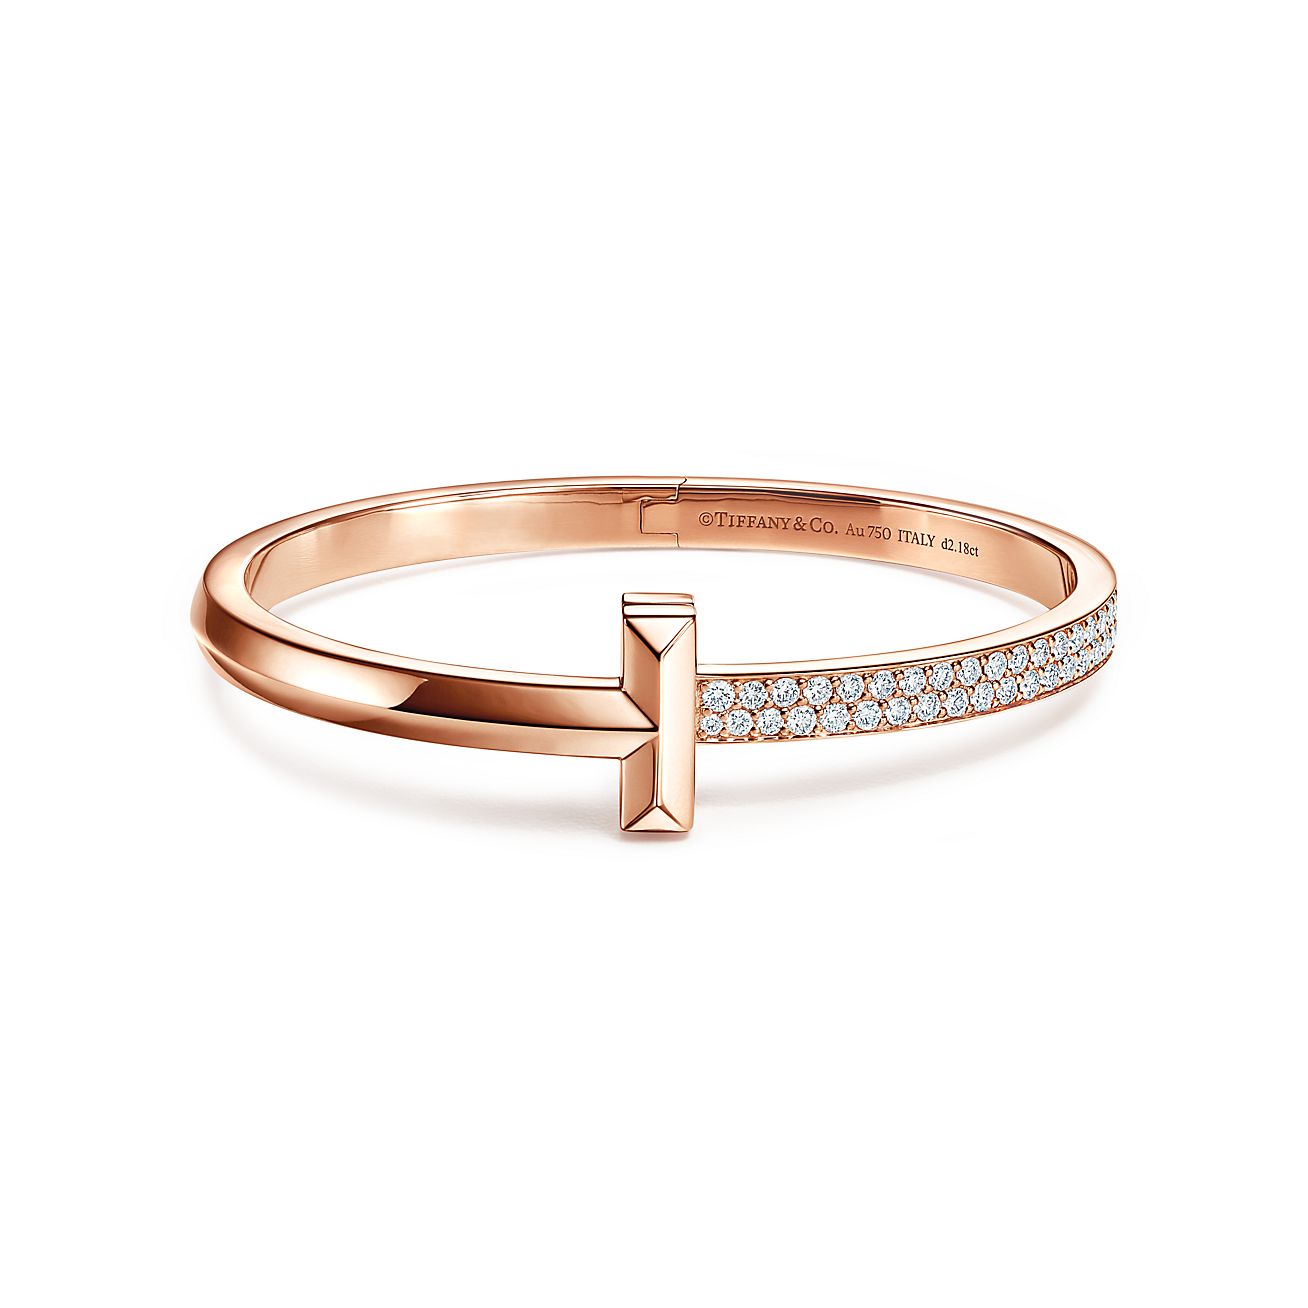 Tiffany & Co. (High Jewelry) 1938 Diamond Bracelet, Marquise